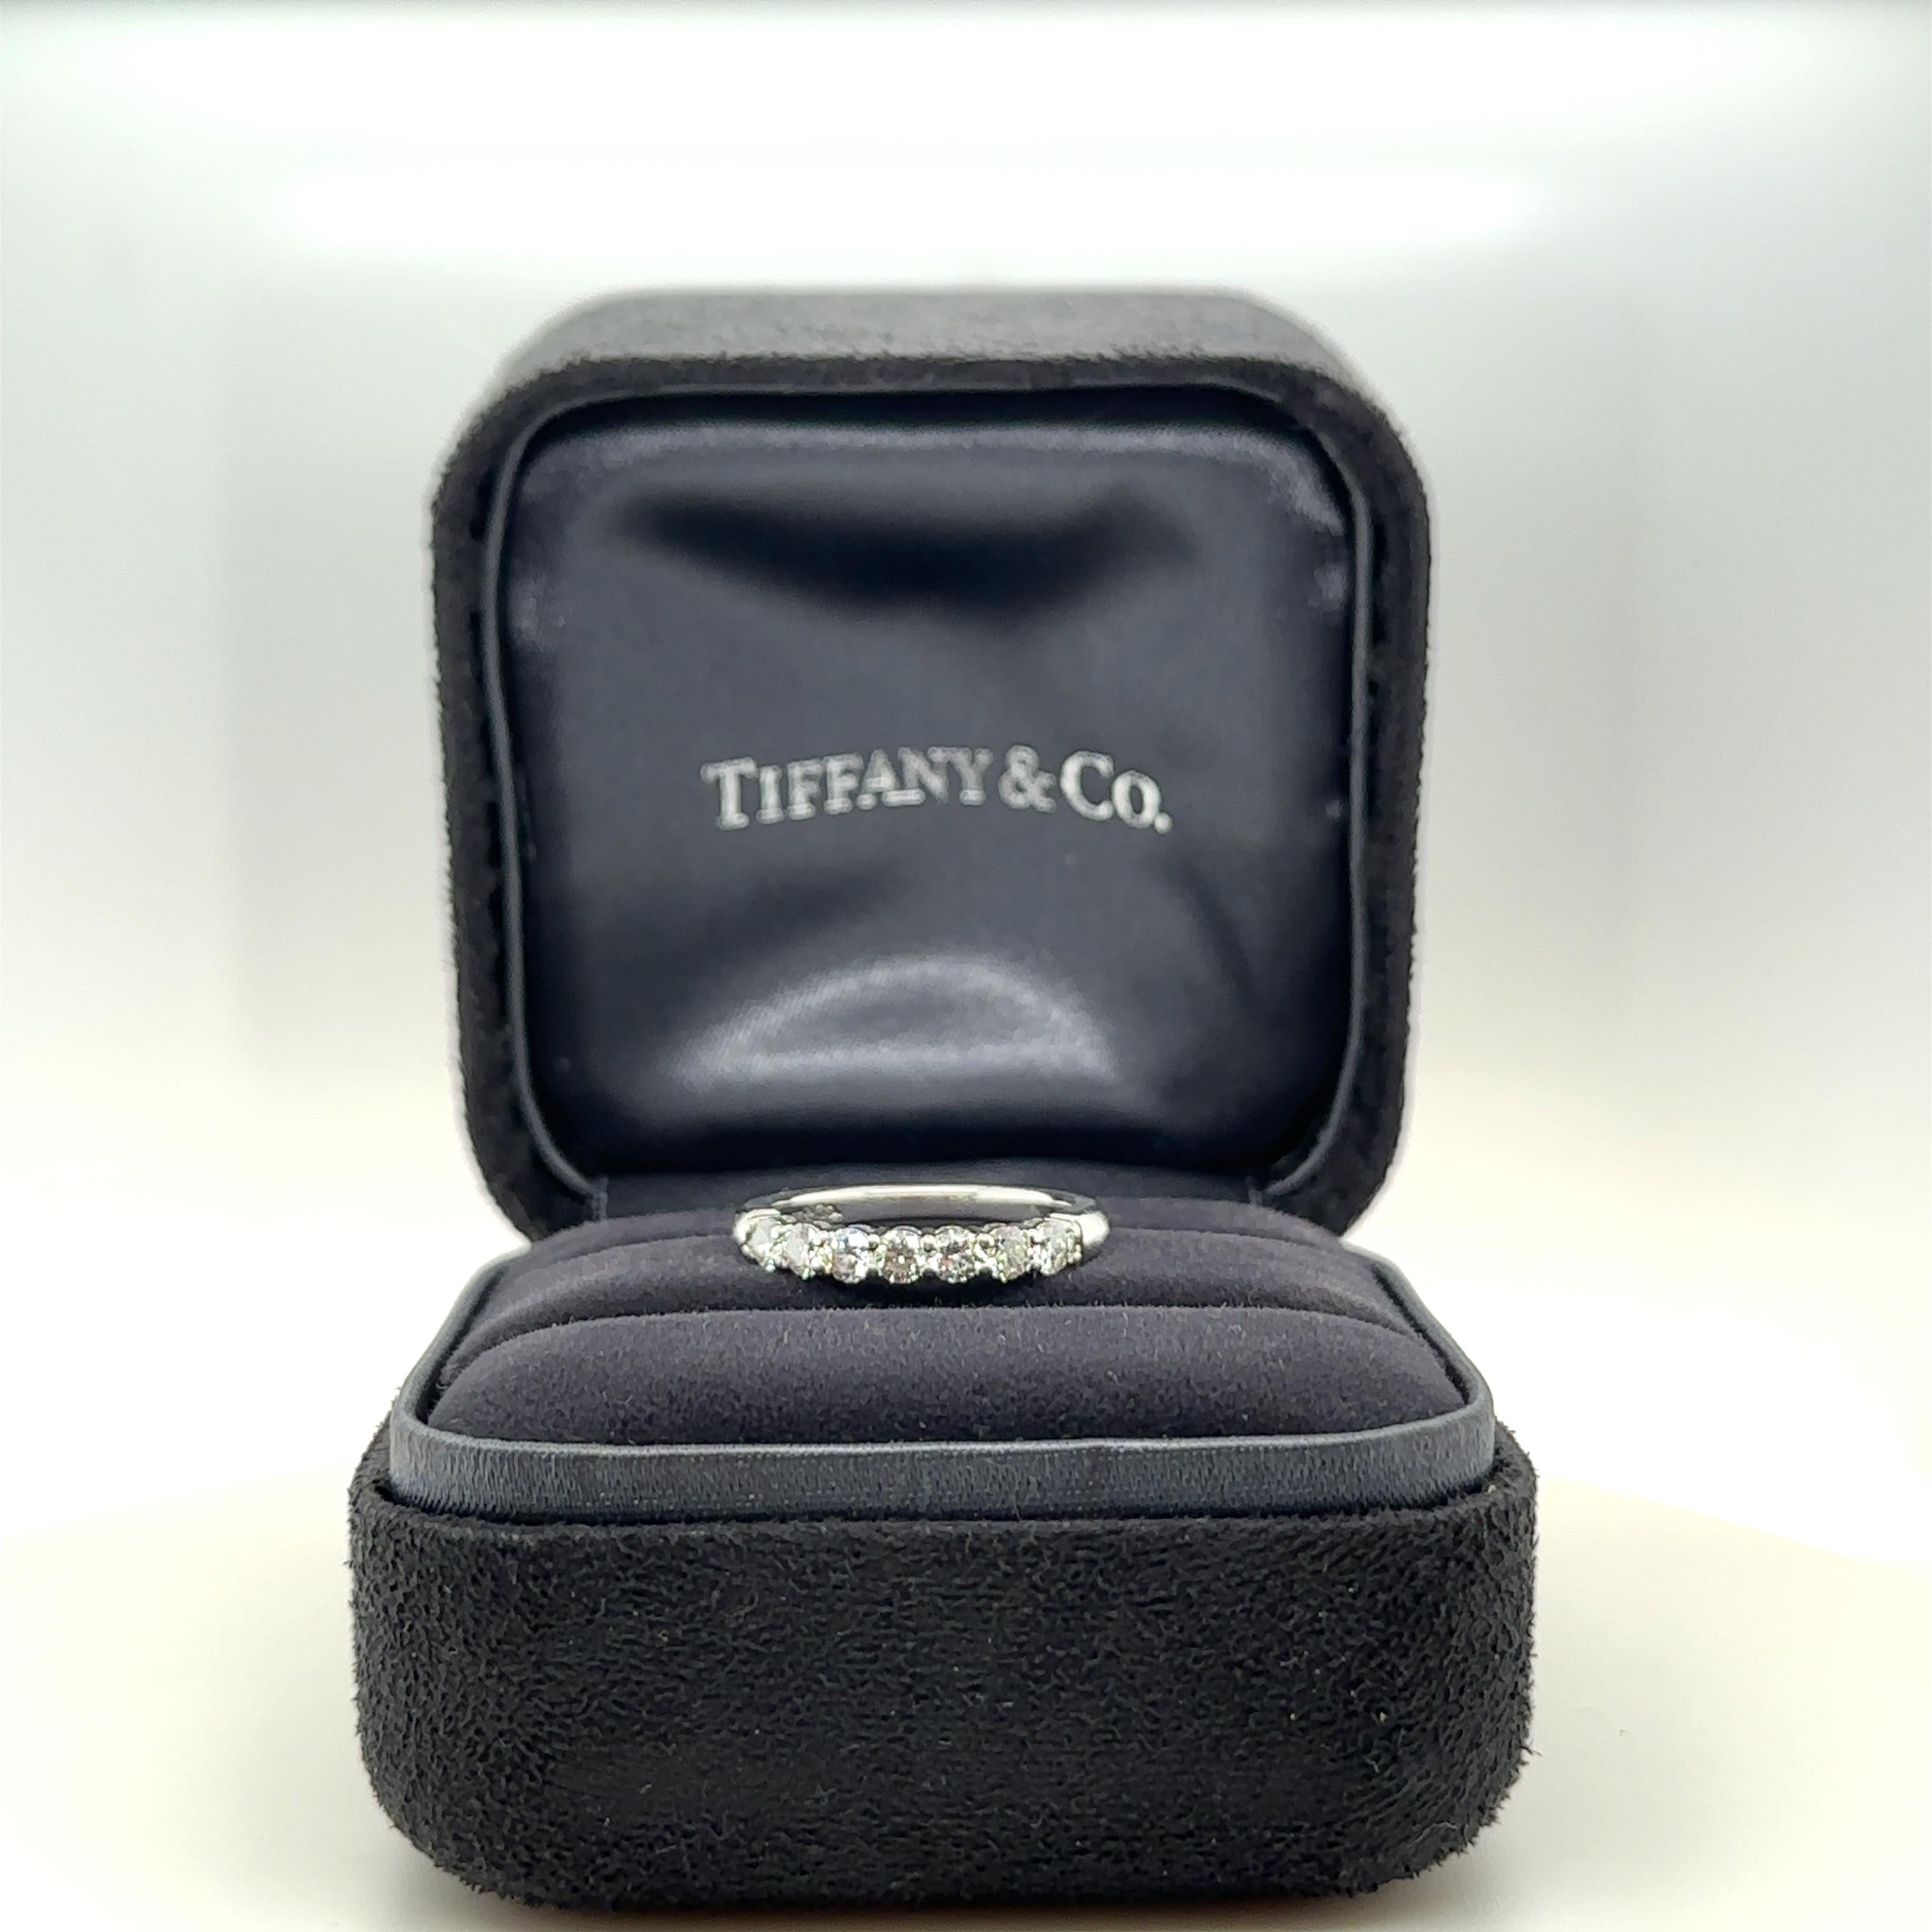 Brilliant Cut Tiffany & Co Diamond Eternity Ring 0.60ct For Sale